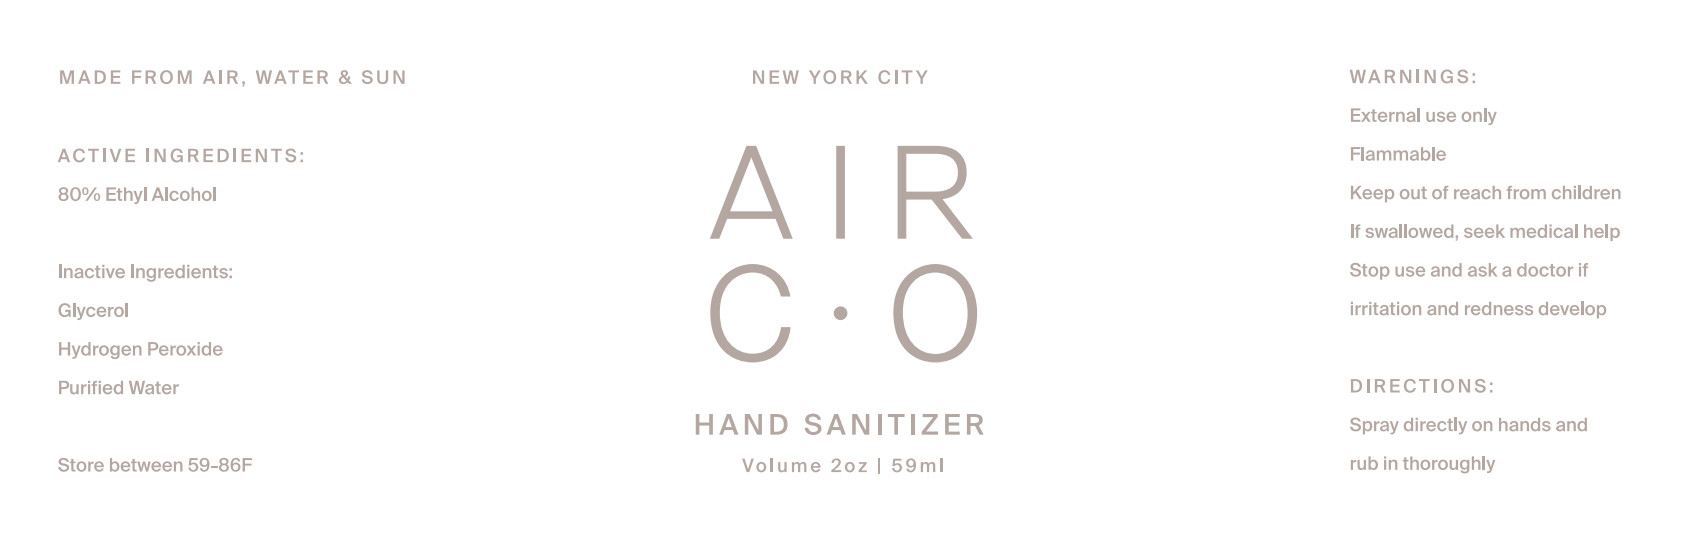 Air Co Hand Sanitizer 59mL Label